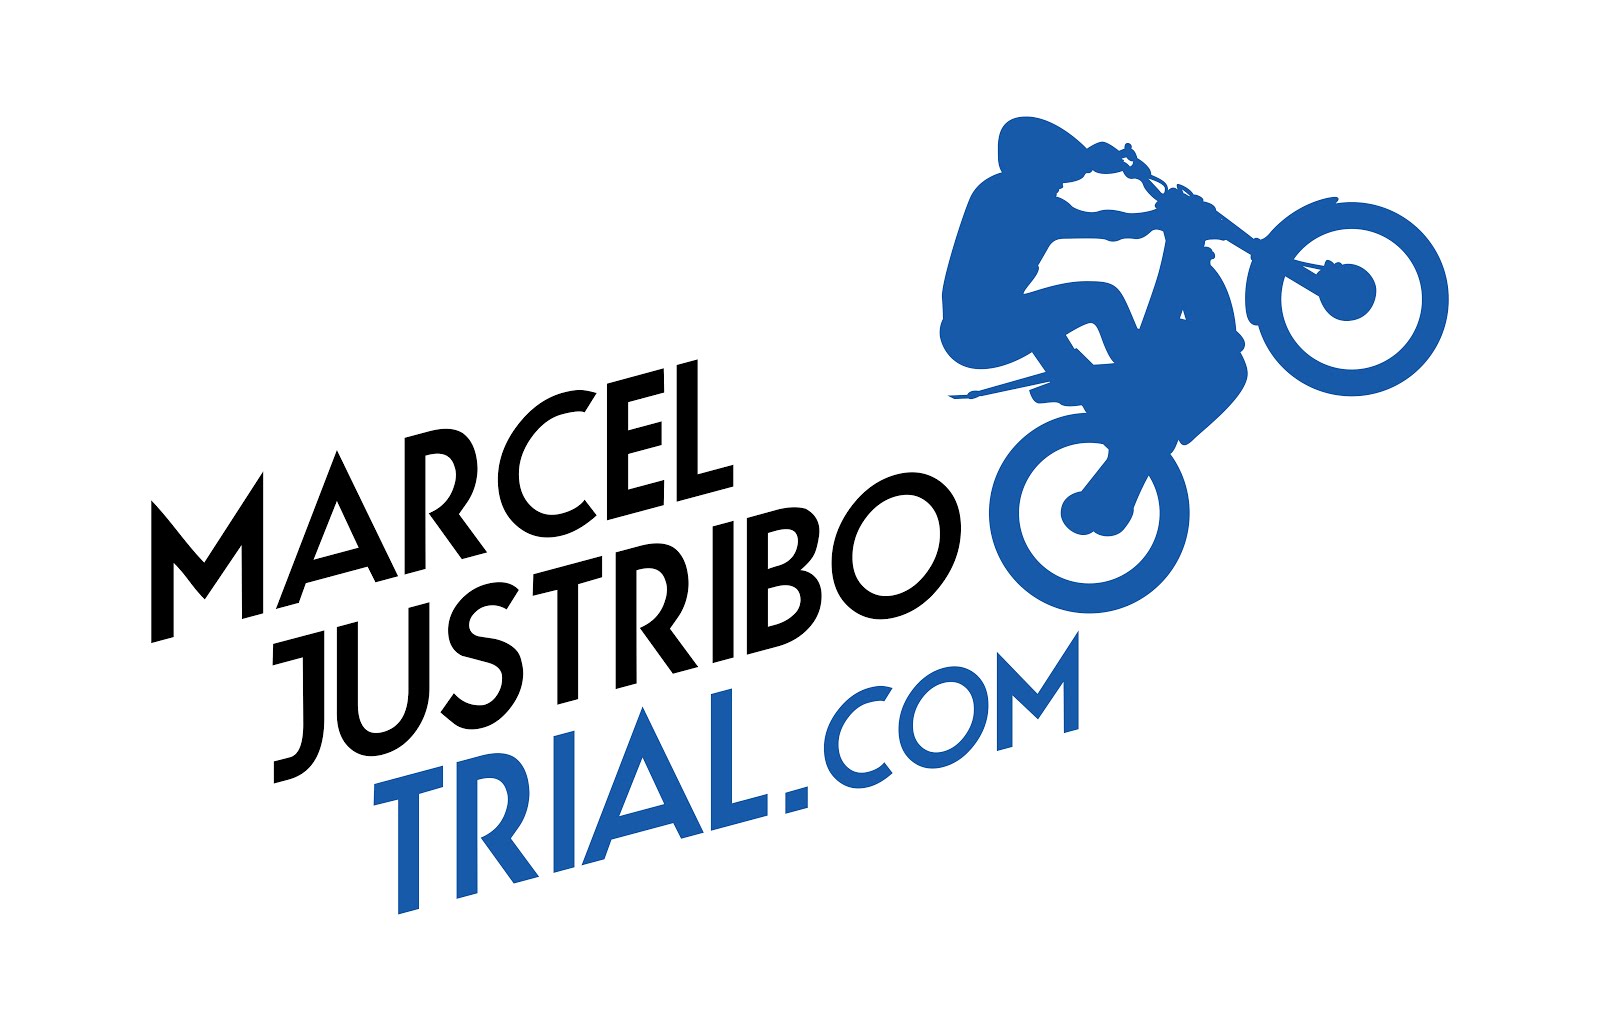 MARCEL JUSTRIBÓ TRIAL.COM